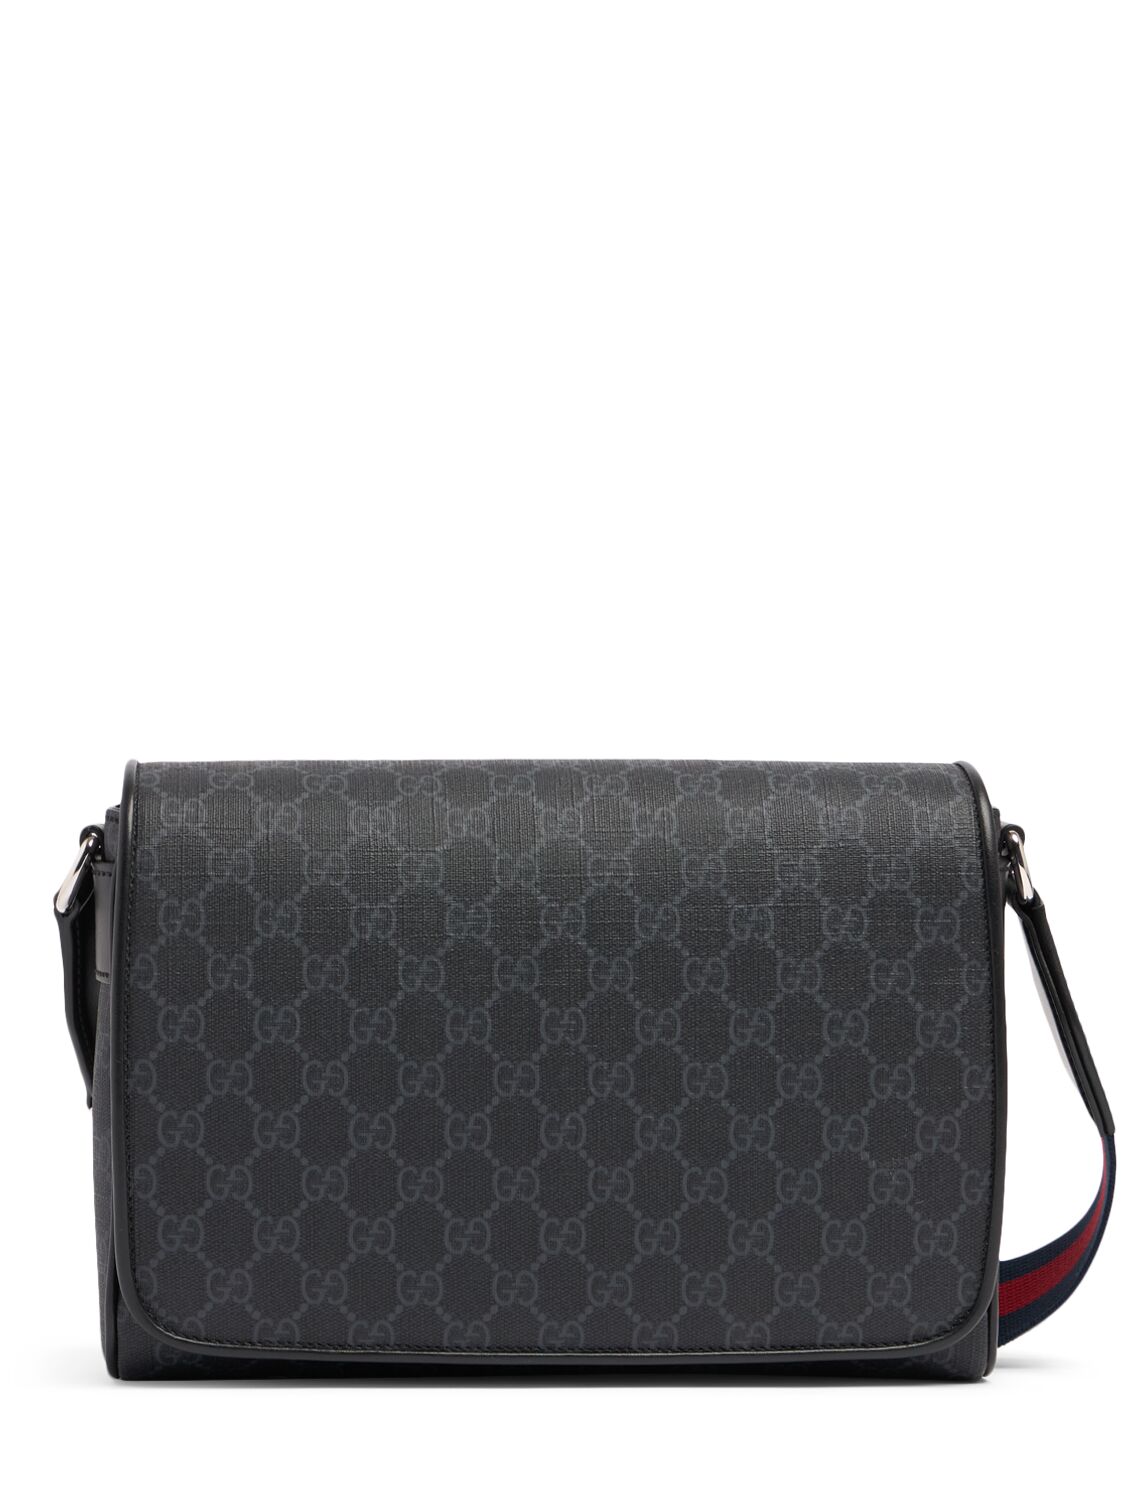 Gucci Crossbody Bag In Black